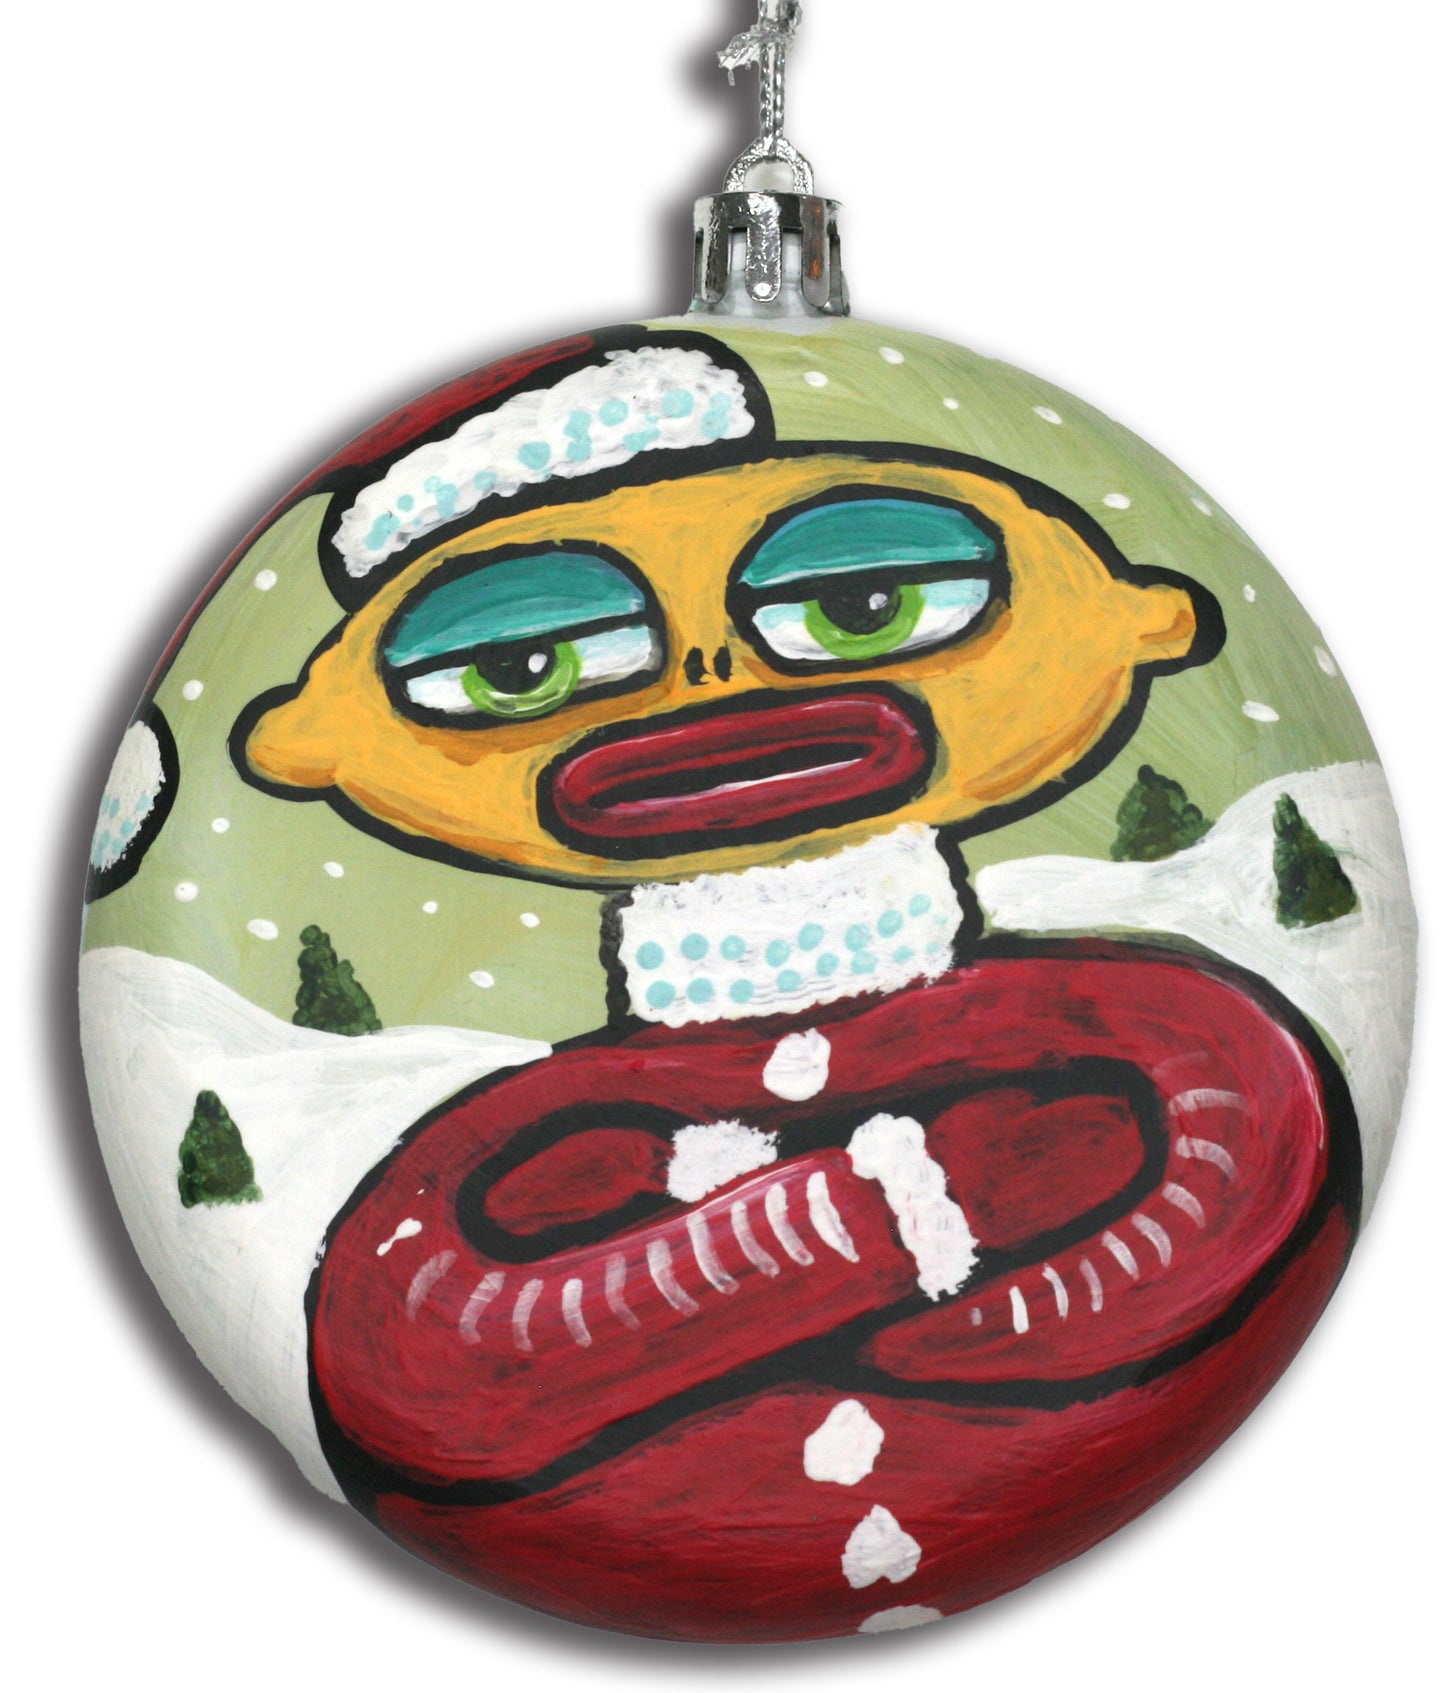 Wassailing Christmas ornament